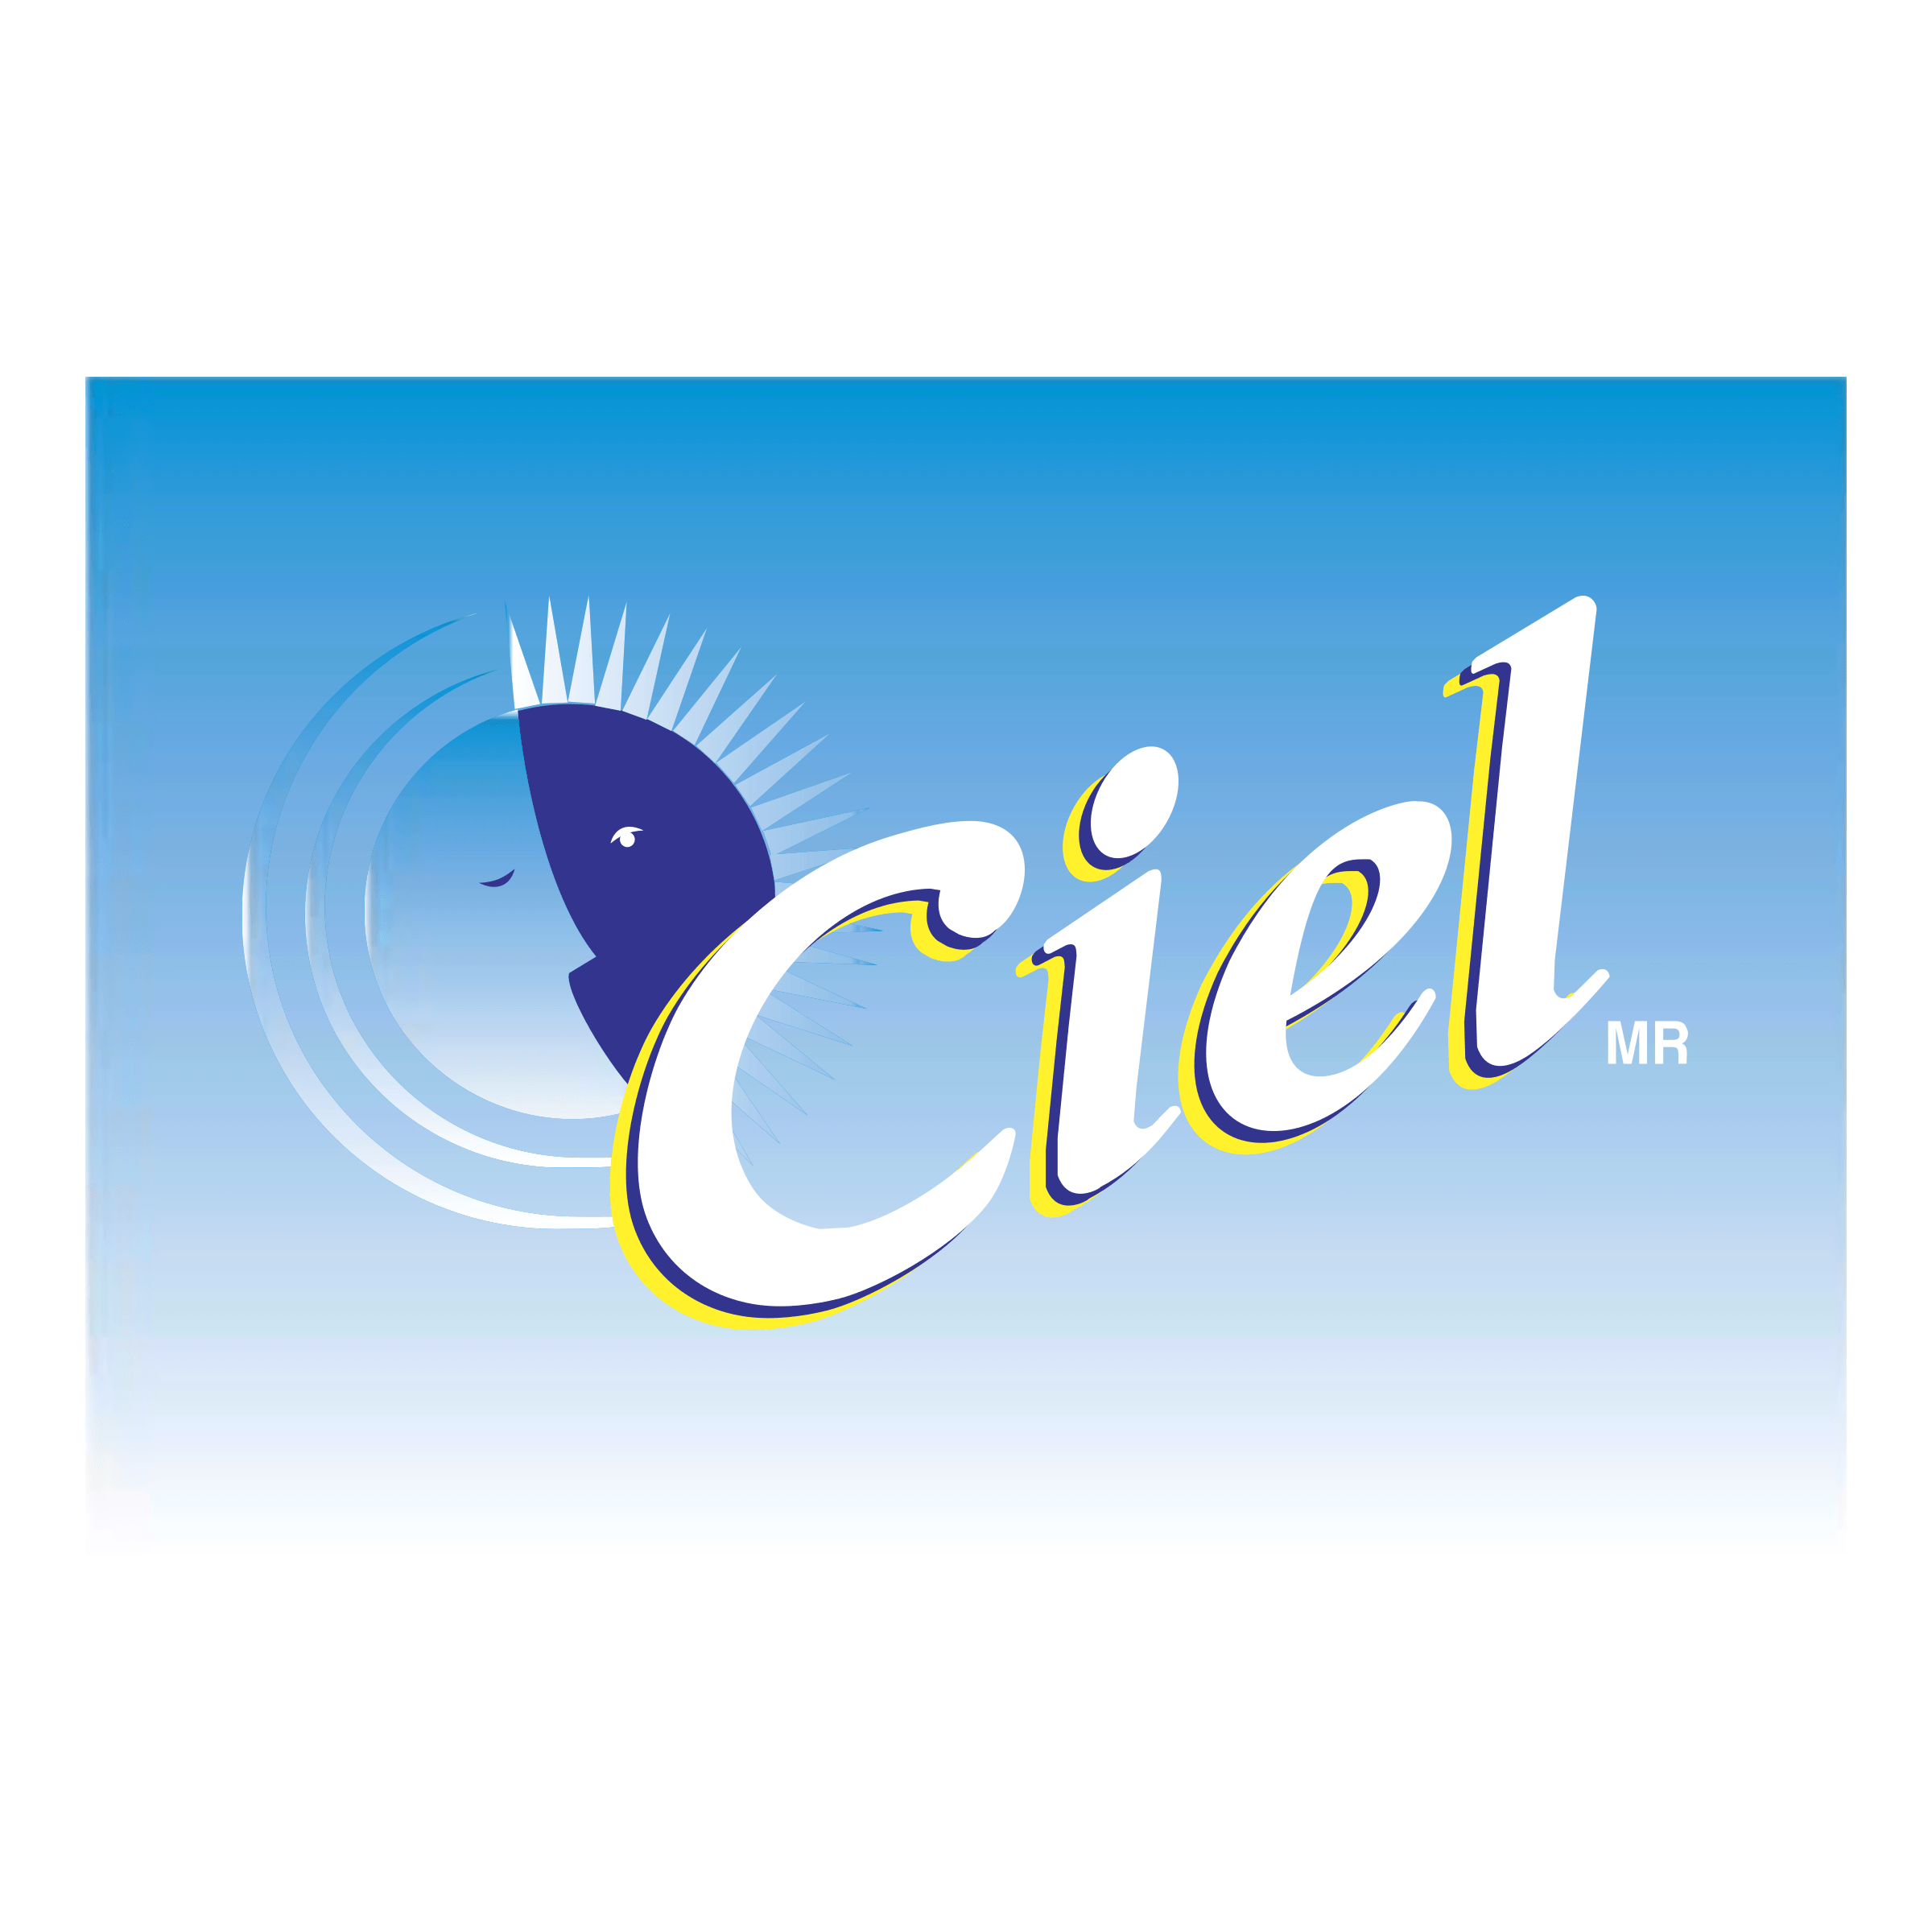 Ciel Logo - Ciel Logo PNG Transparent & SVG Vector - Freebie Supply